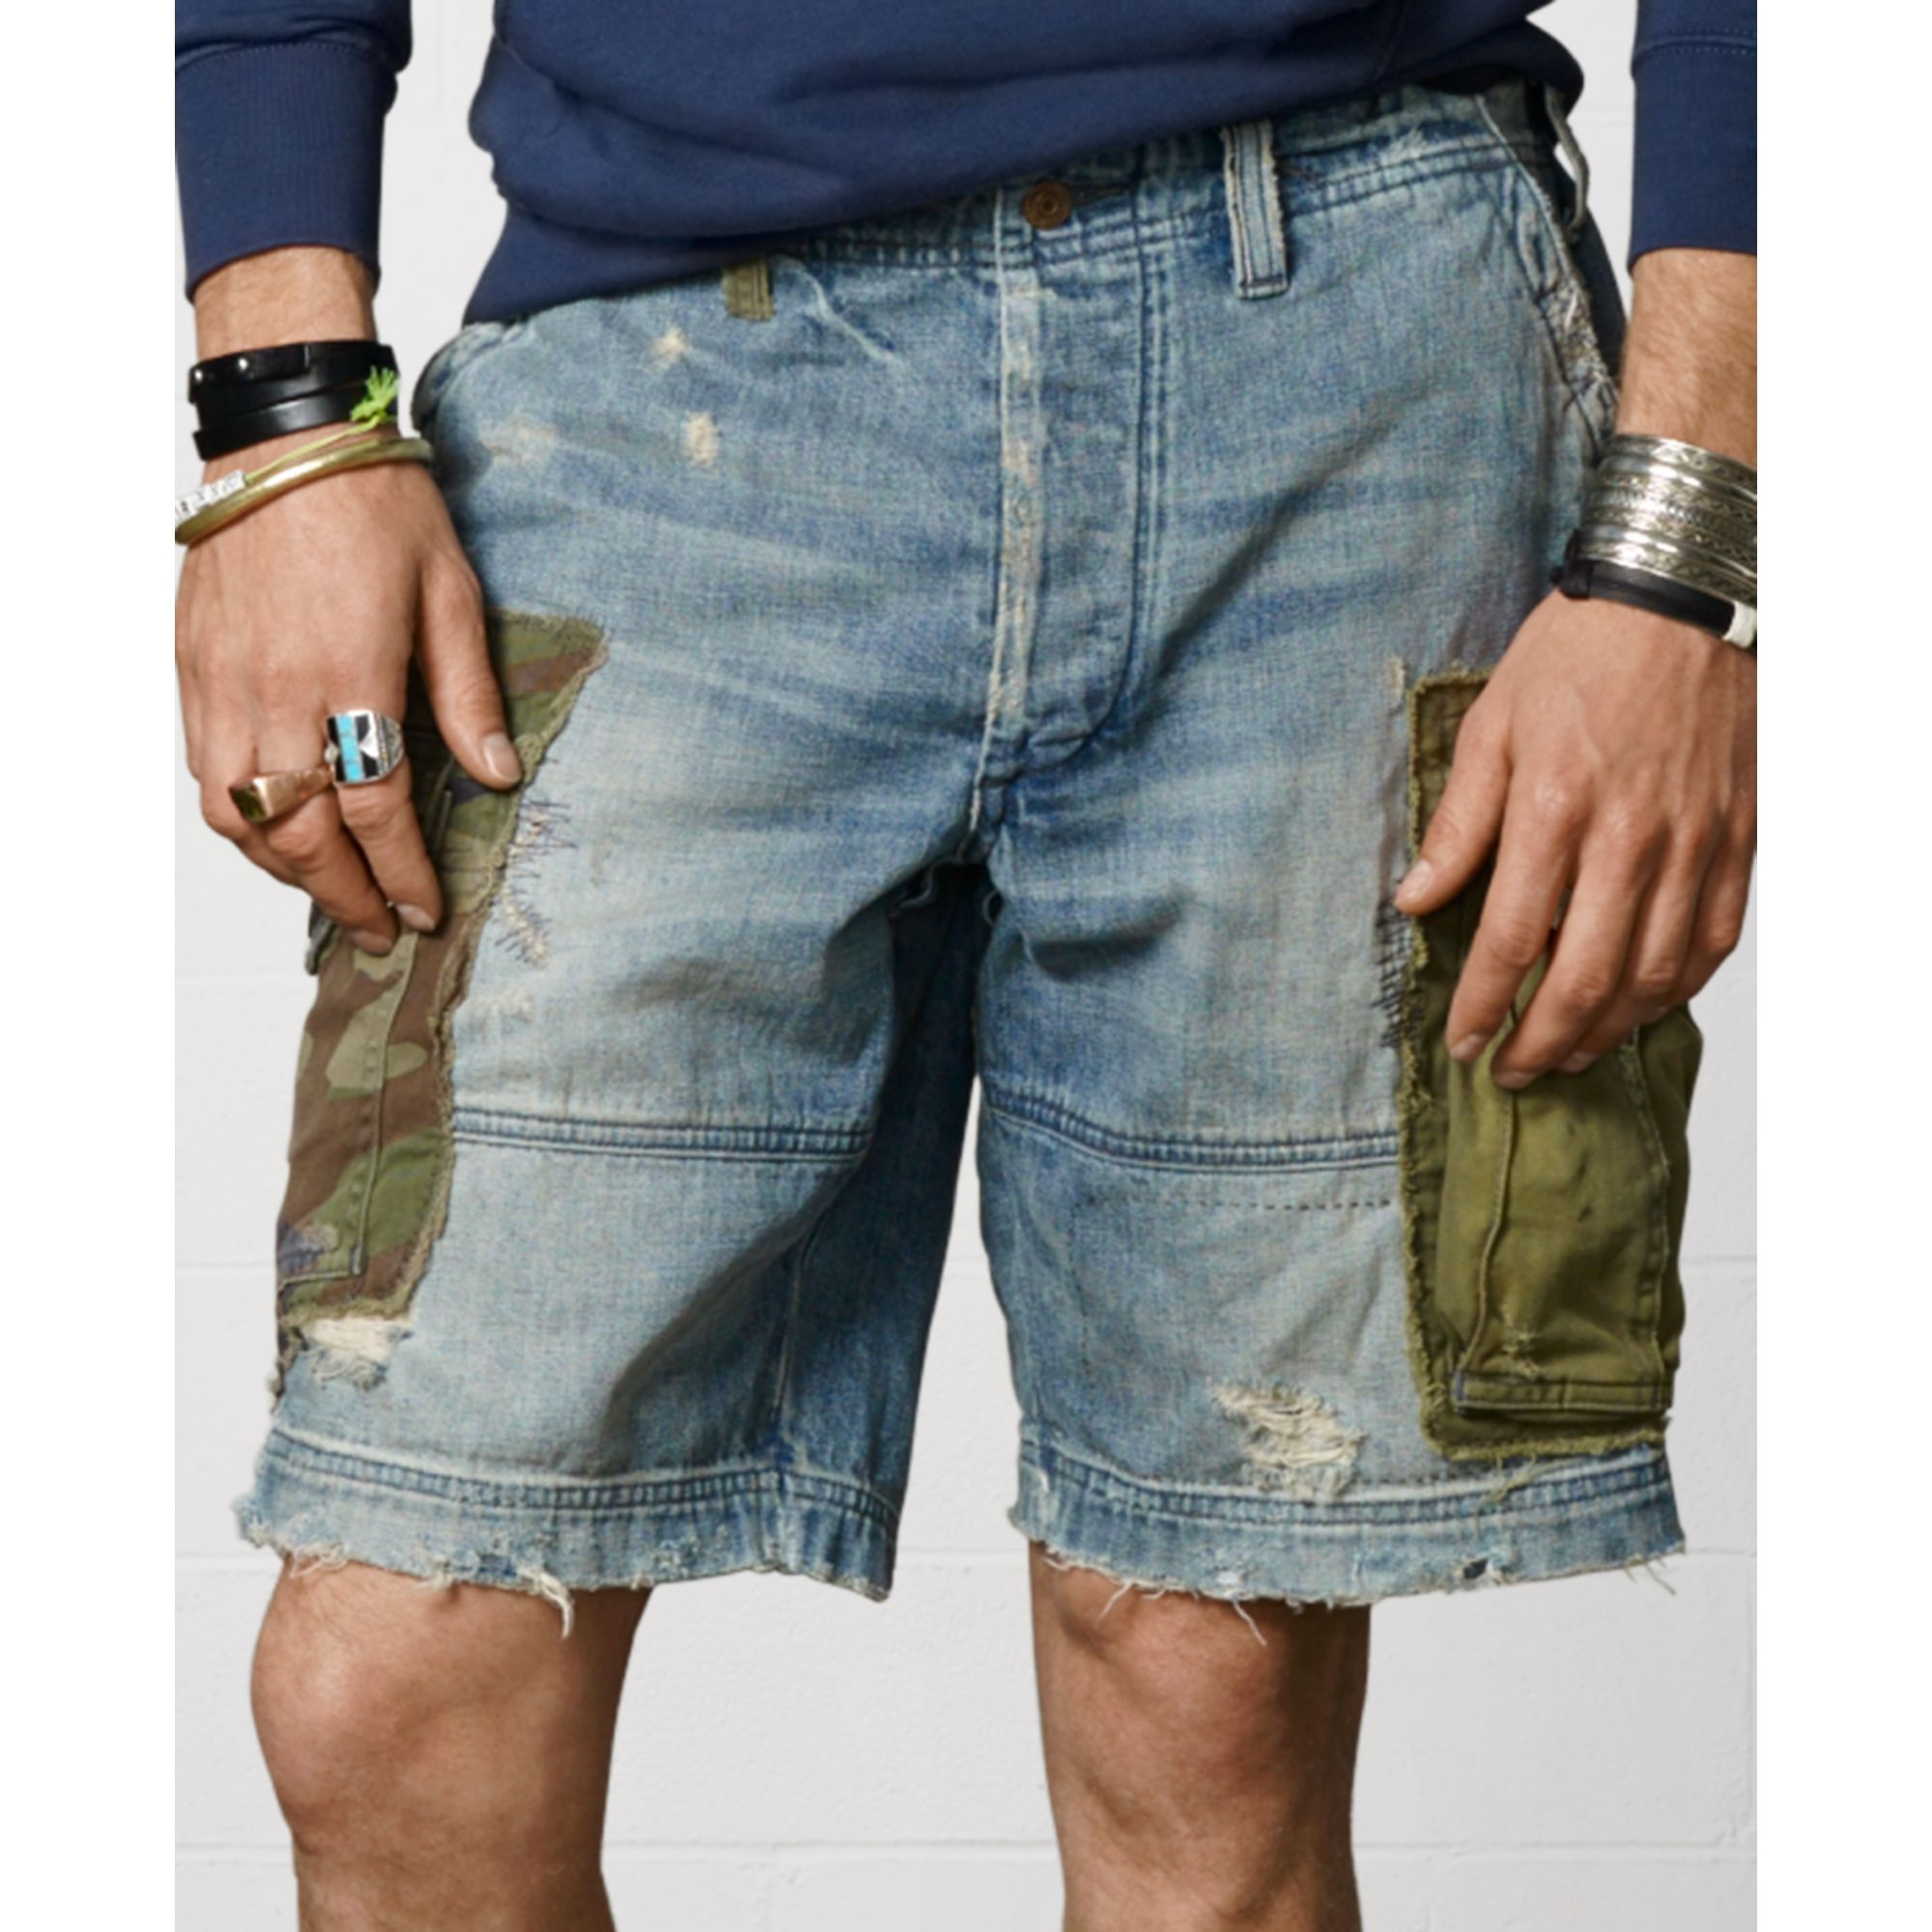 Lyst - Denim & supply ralph lauren Ebbetts Cargo Shorts in Blue for Men